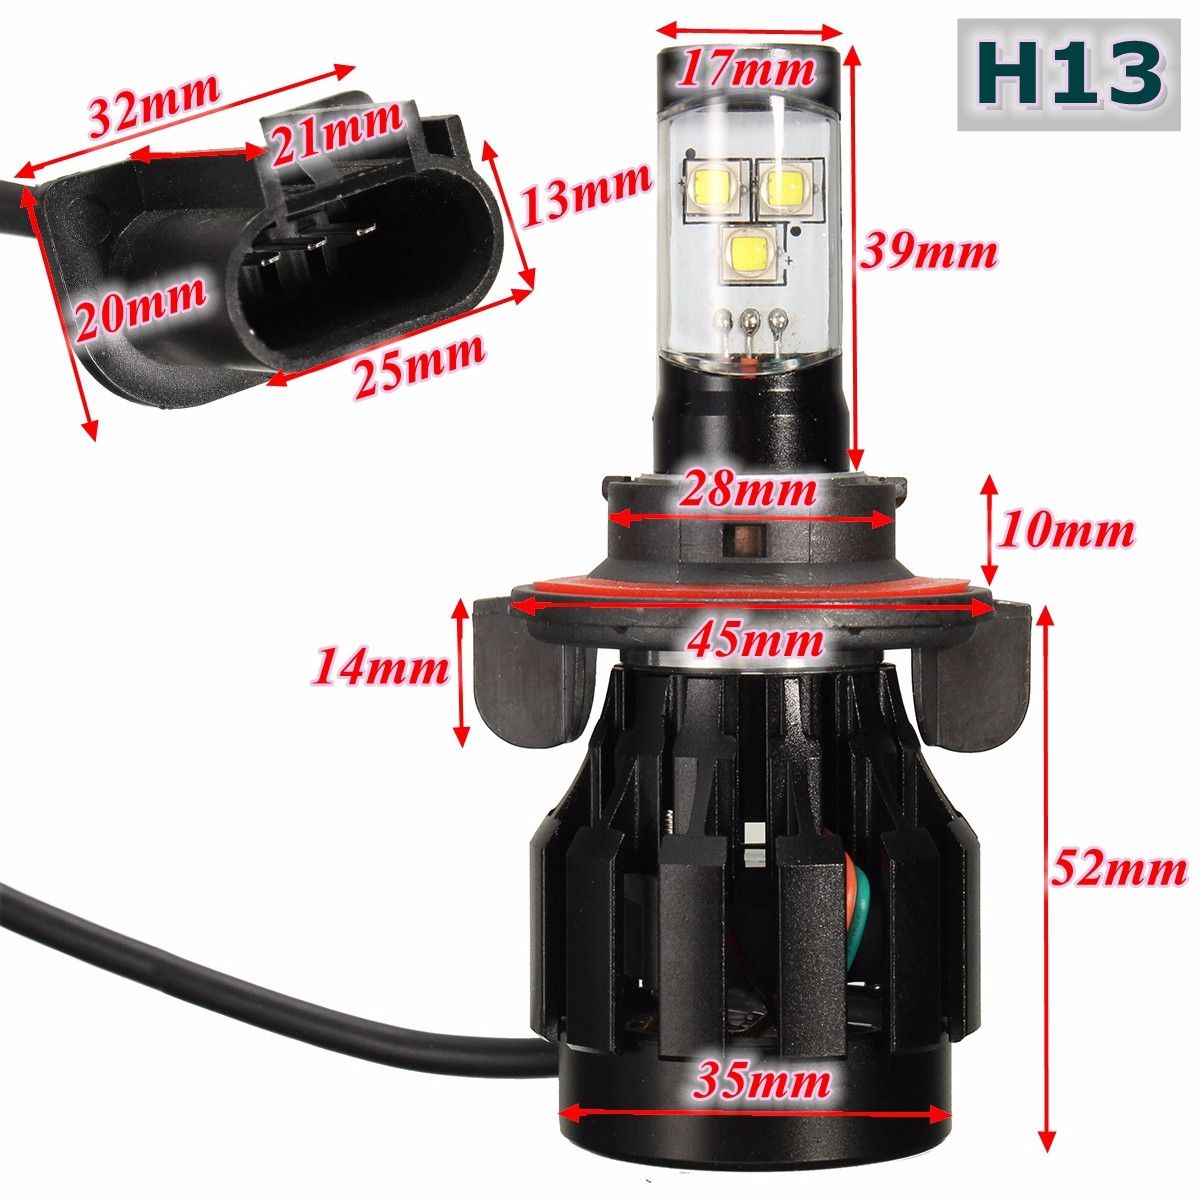 7000LM-60W-H8H9H11H13900590069007-LED-Headlight-Lamps-HiLo-Beam-Bulbs-1046244